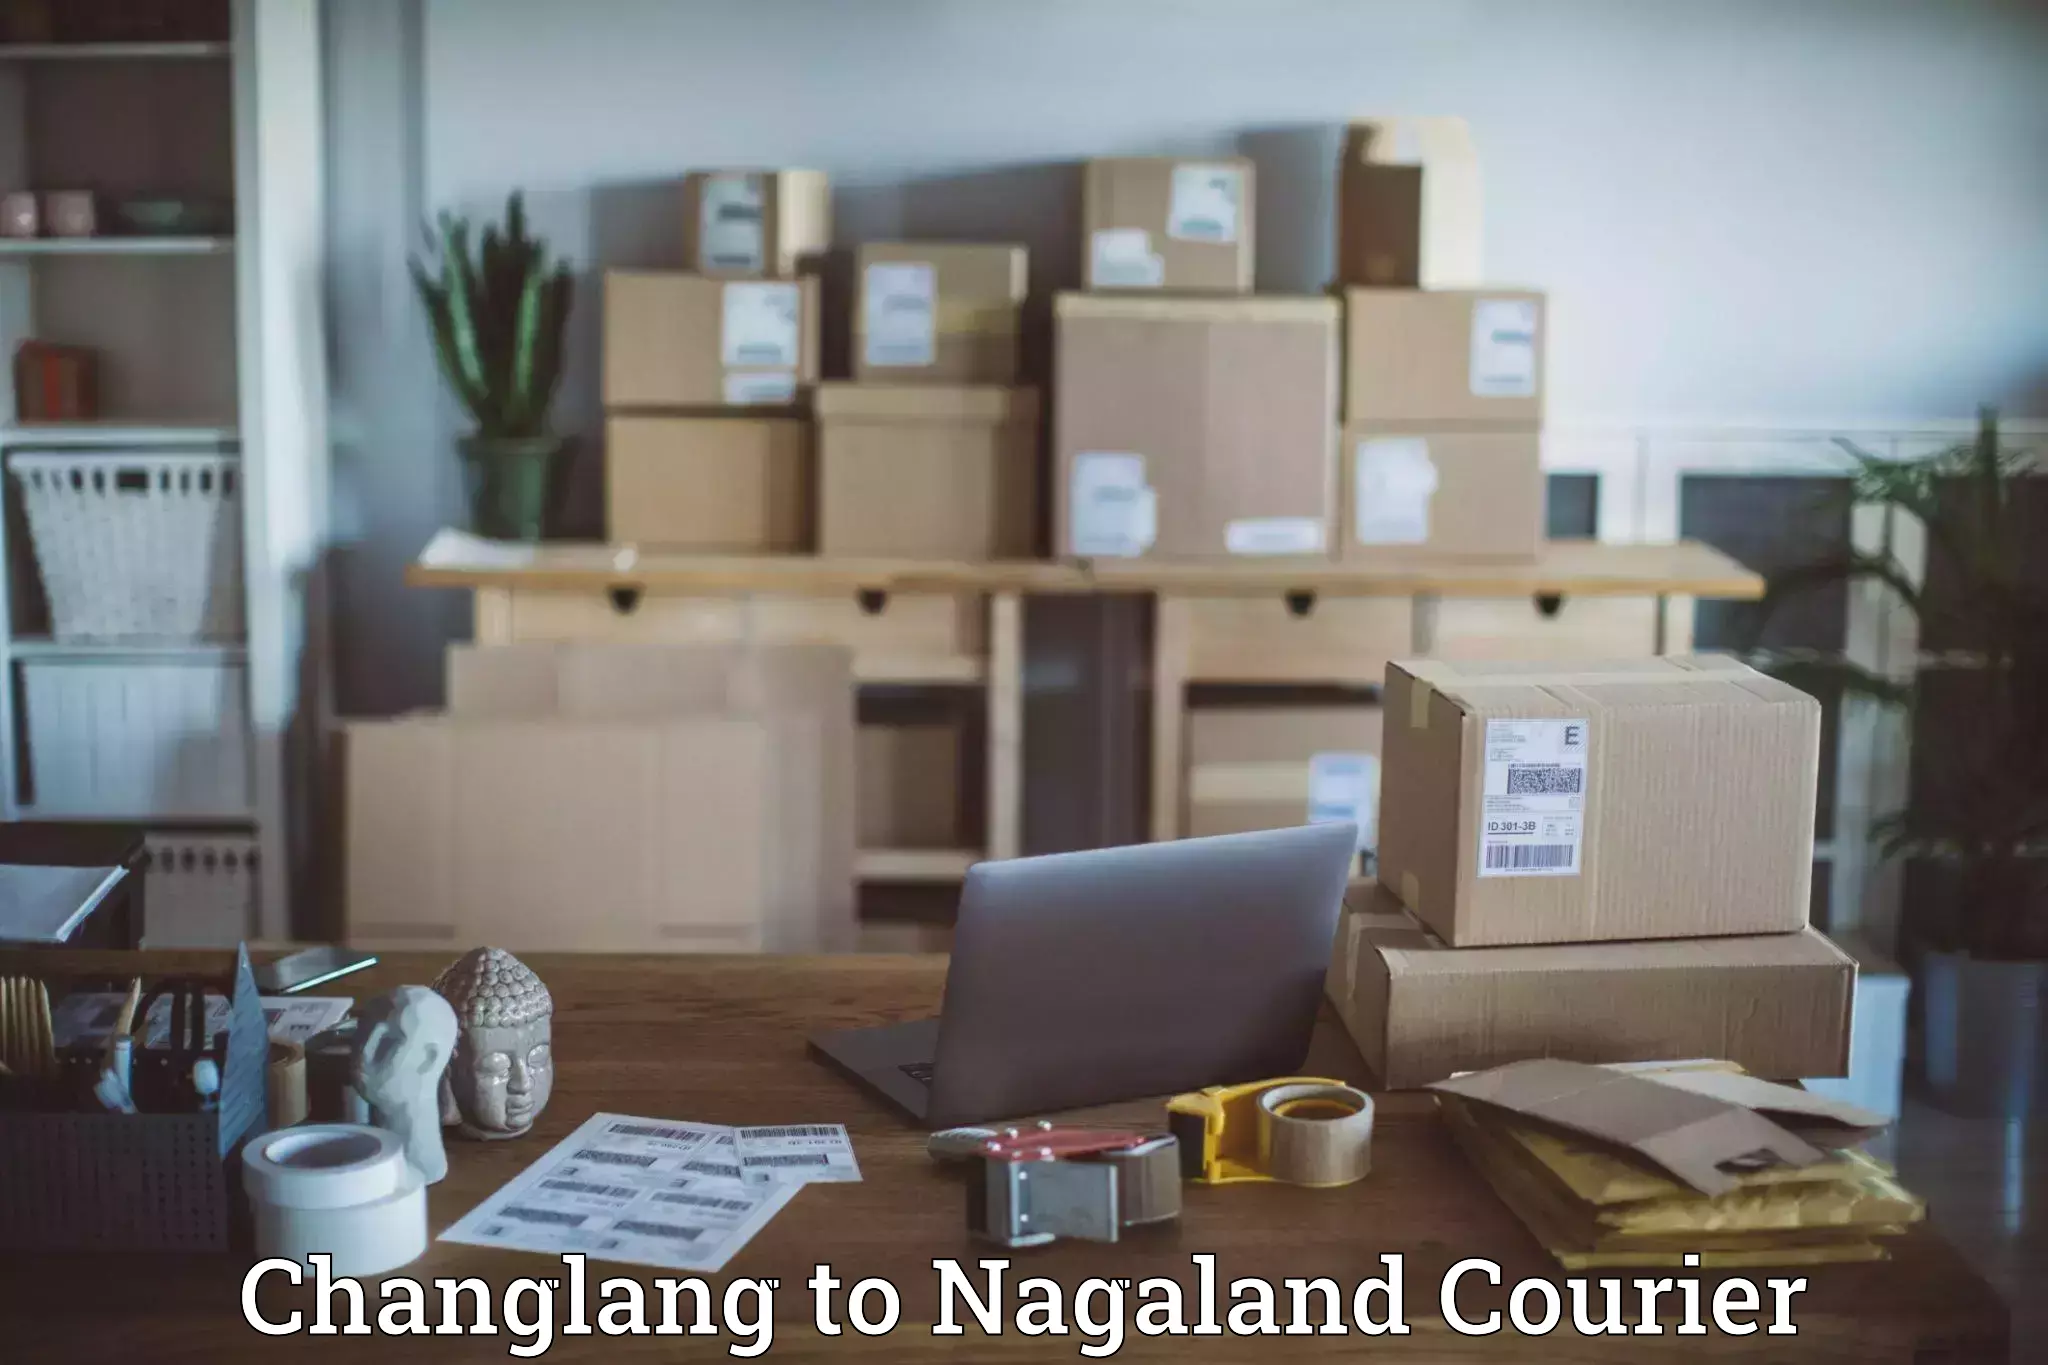 Advanced tracking systems Changlang to Nagaland